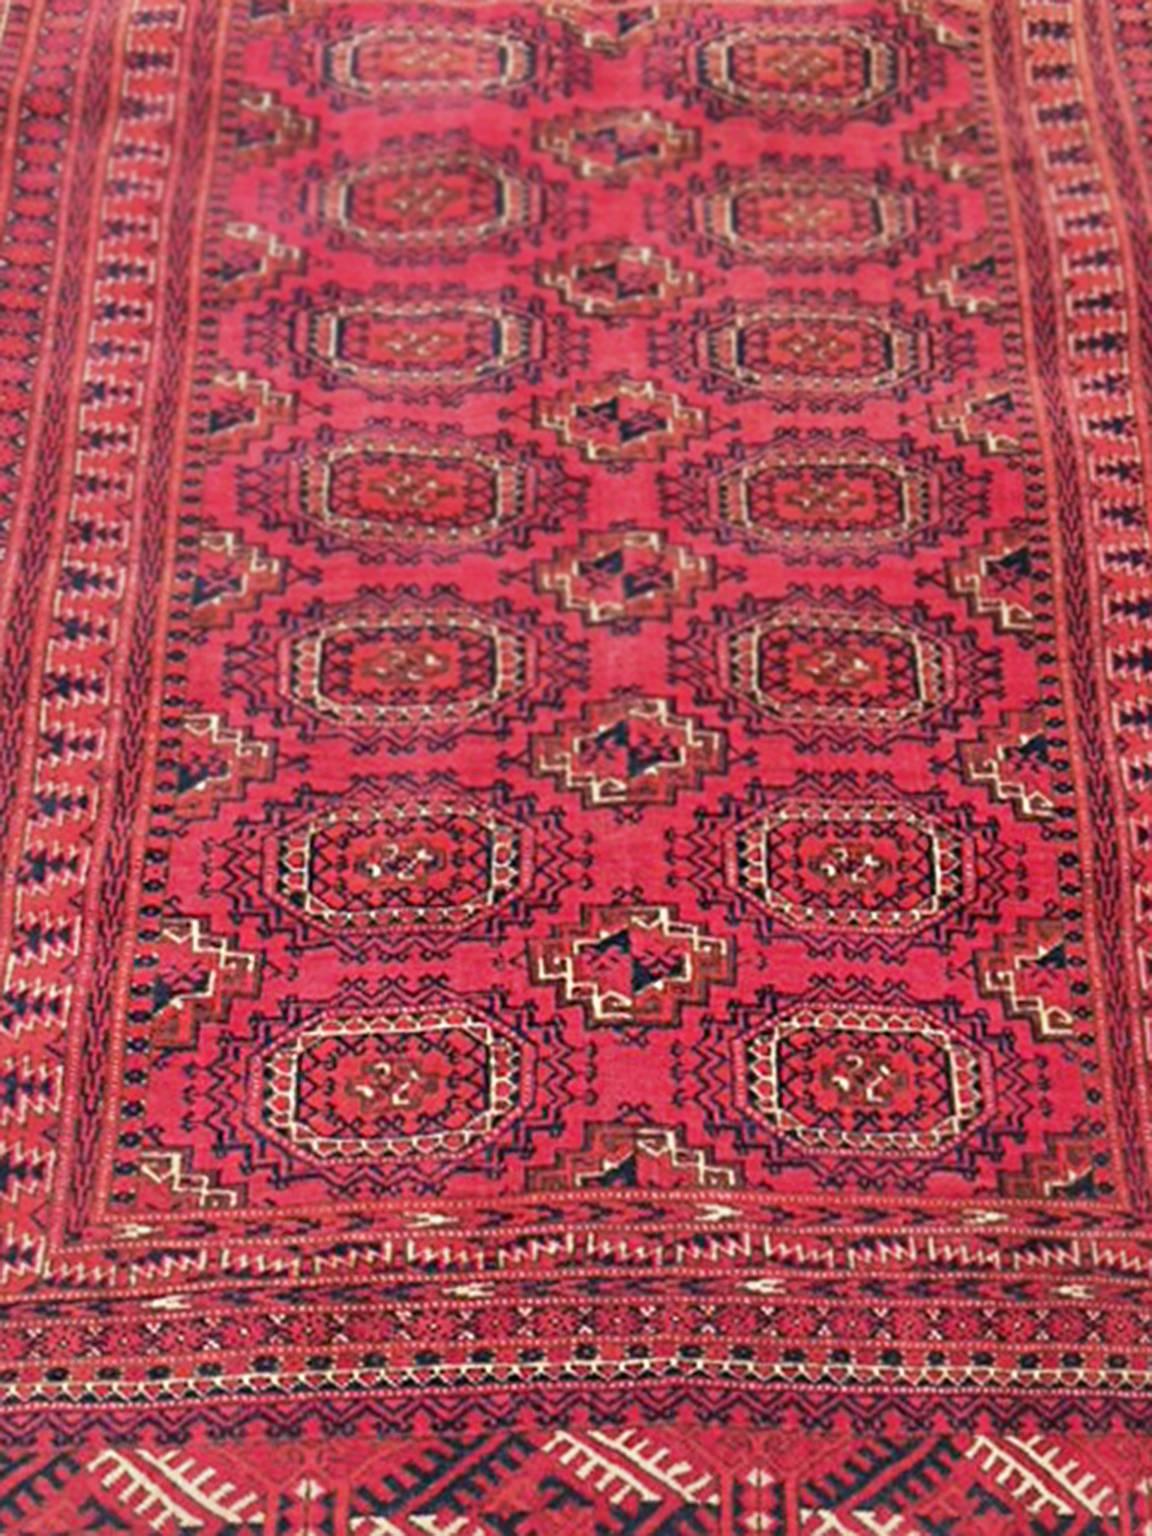 Wool Mid-20th Century Bokhara Rug